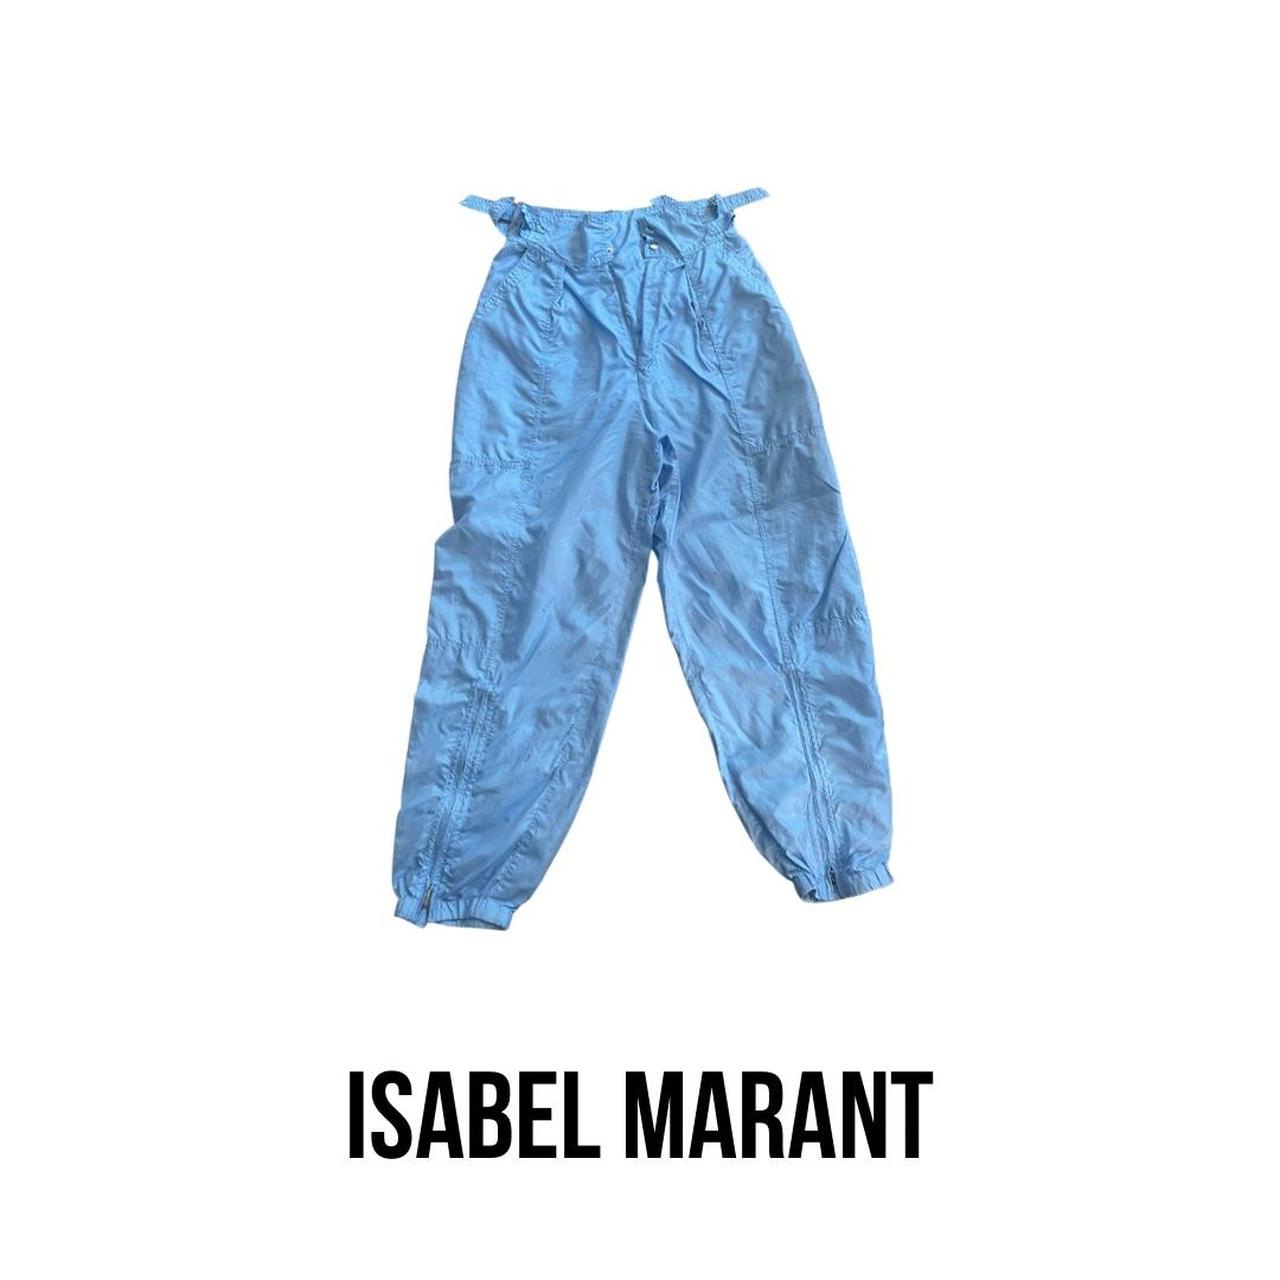 ISABEL MARANT, Olga pleated shell tapered pants, Size...